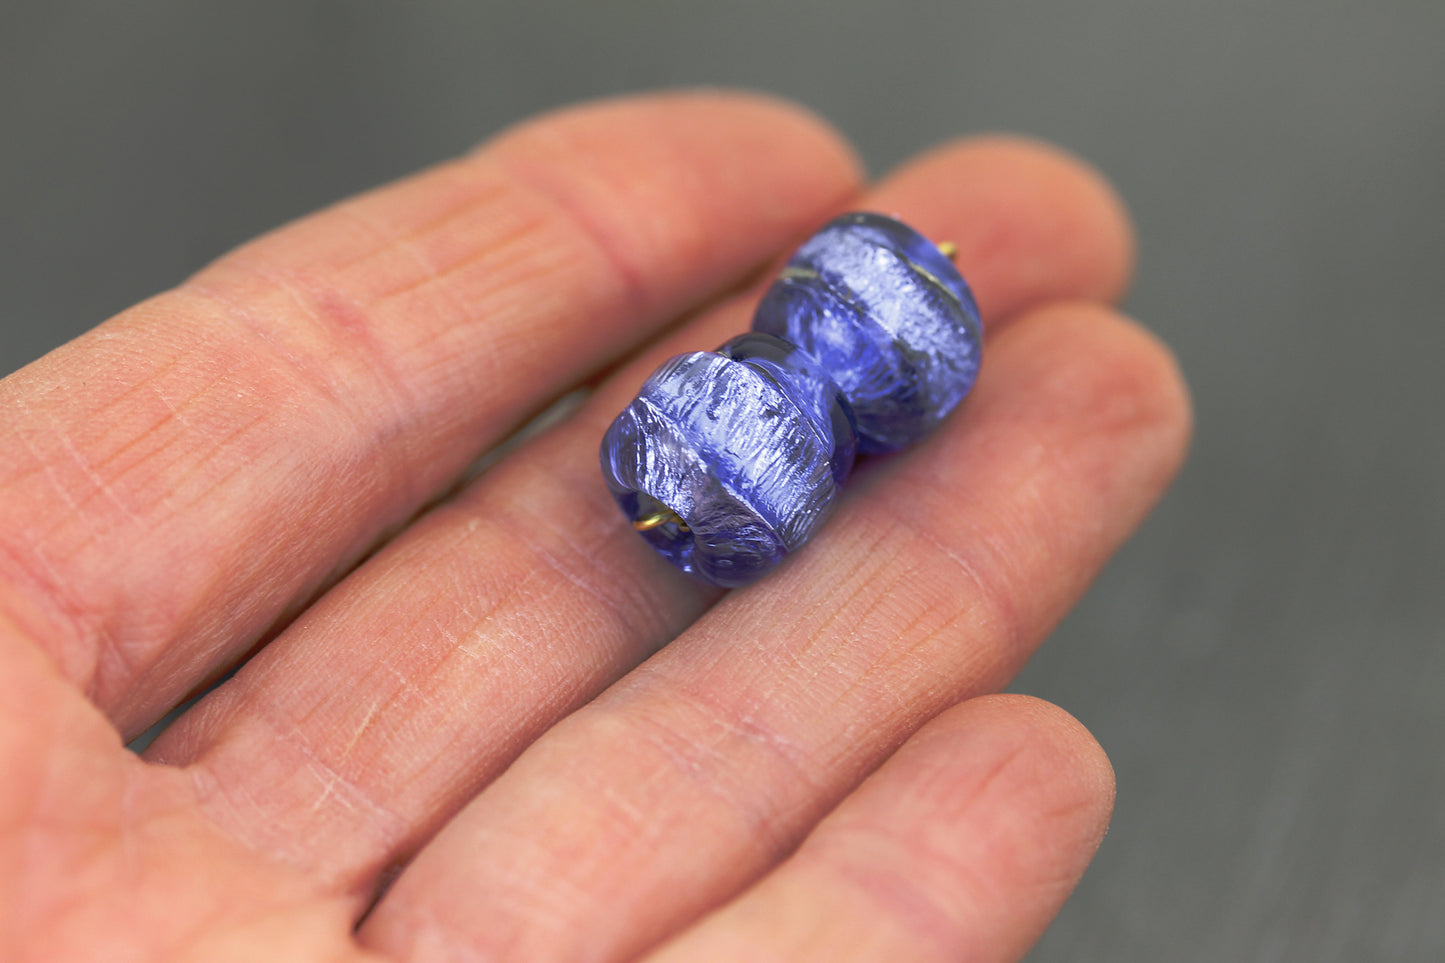 #124066 - Lavender blue Sea Rocks bead pair